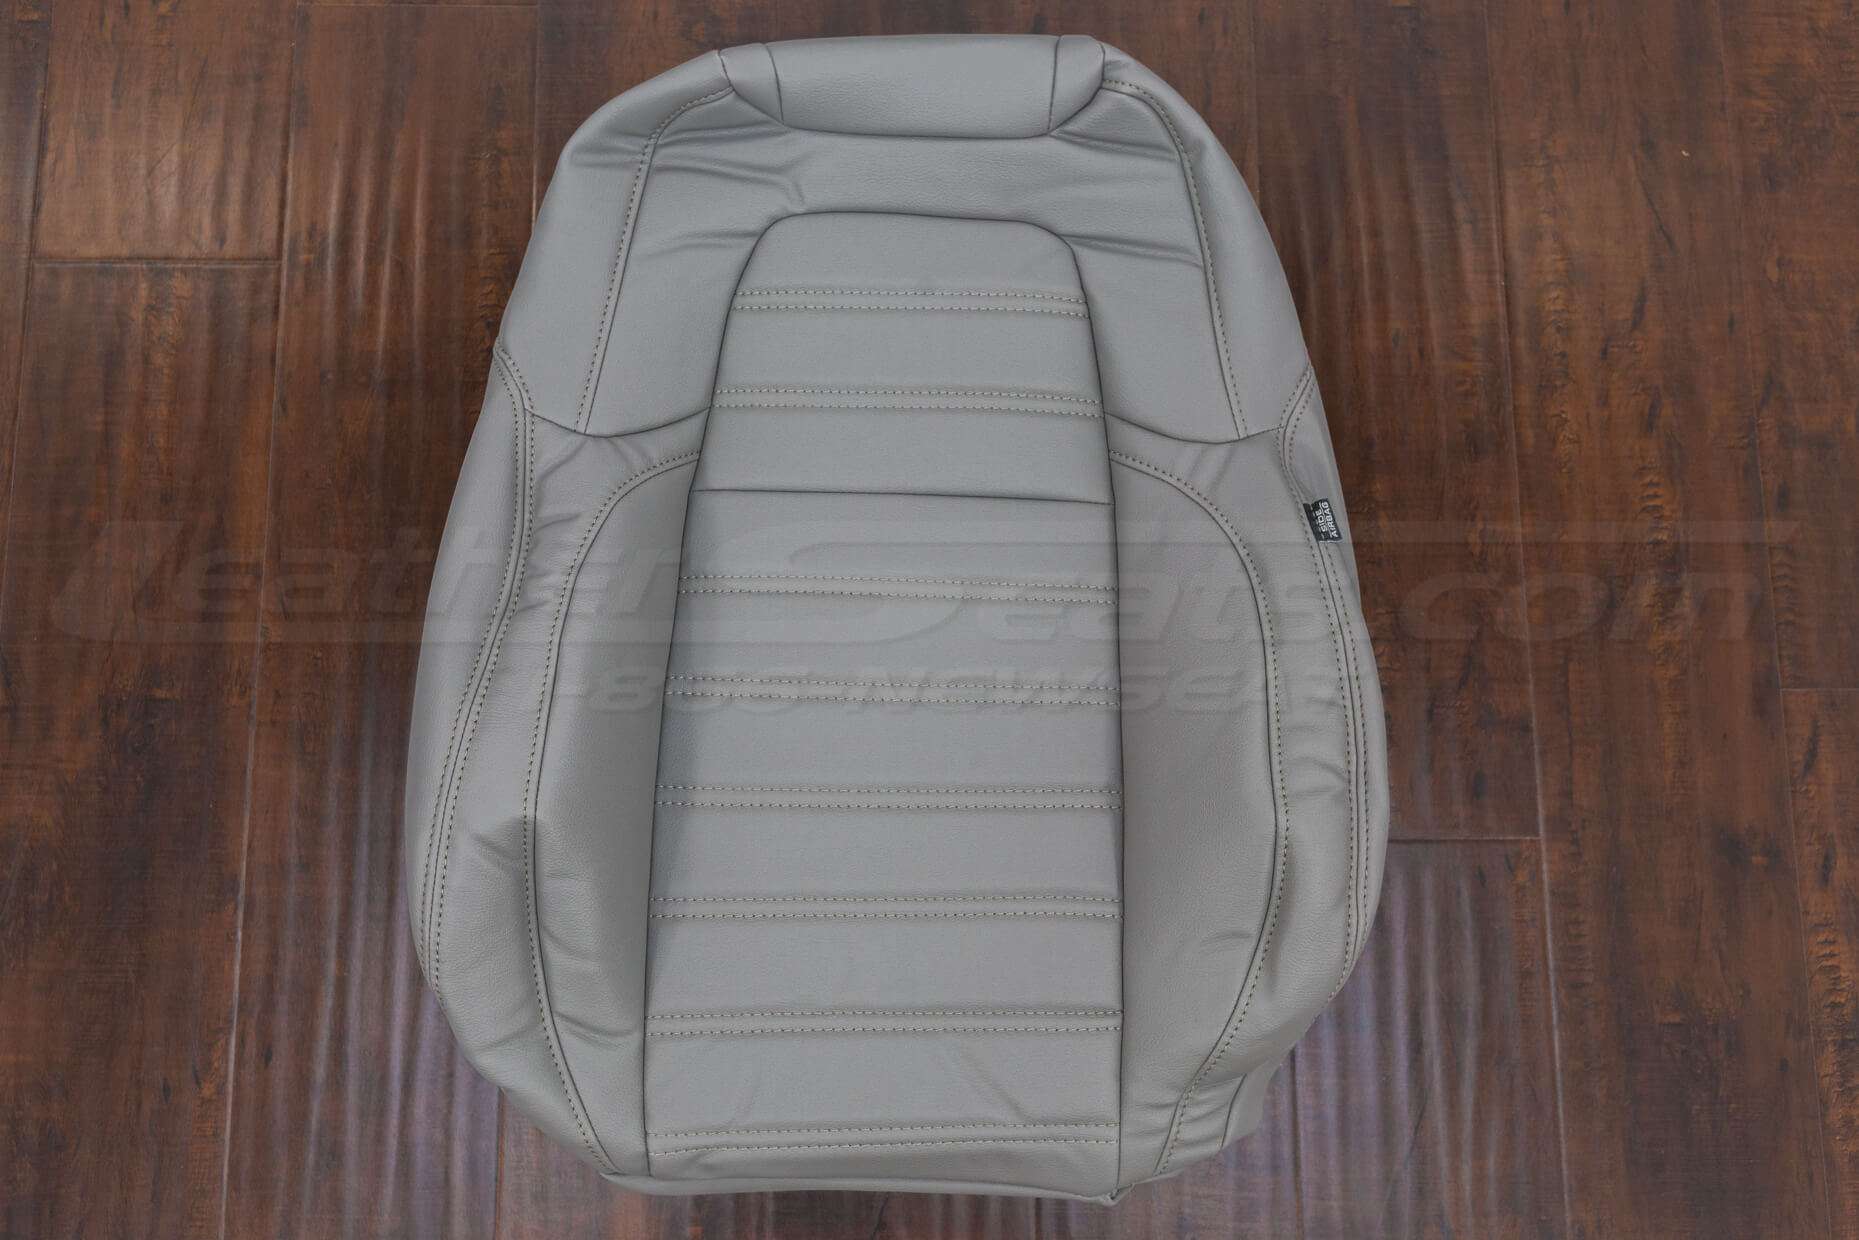 Honda CRV Leather Kit - Ash - Front backrest